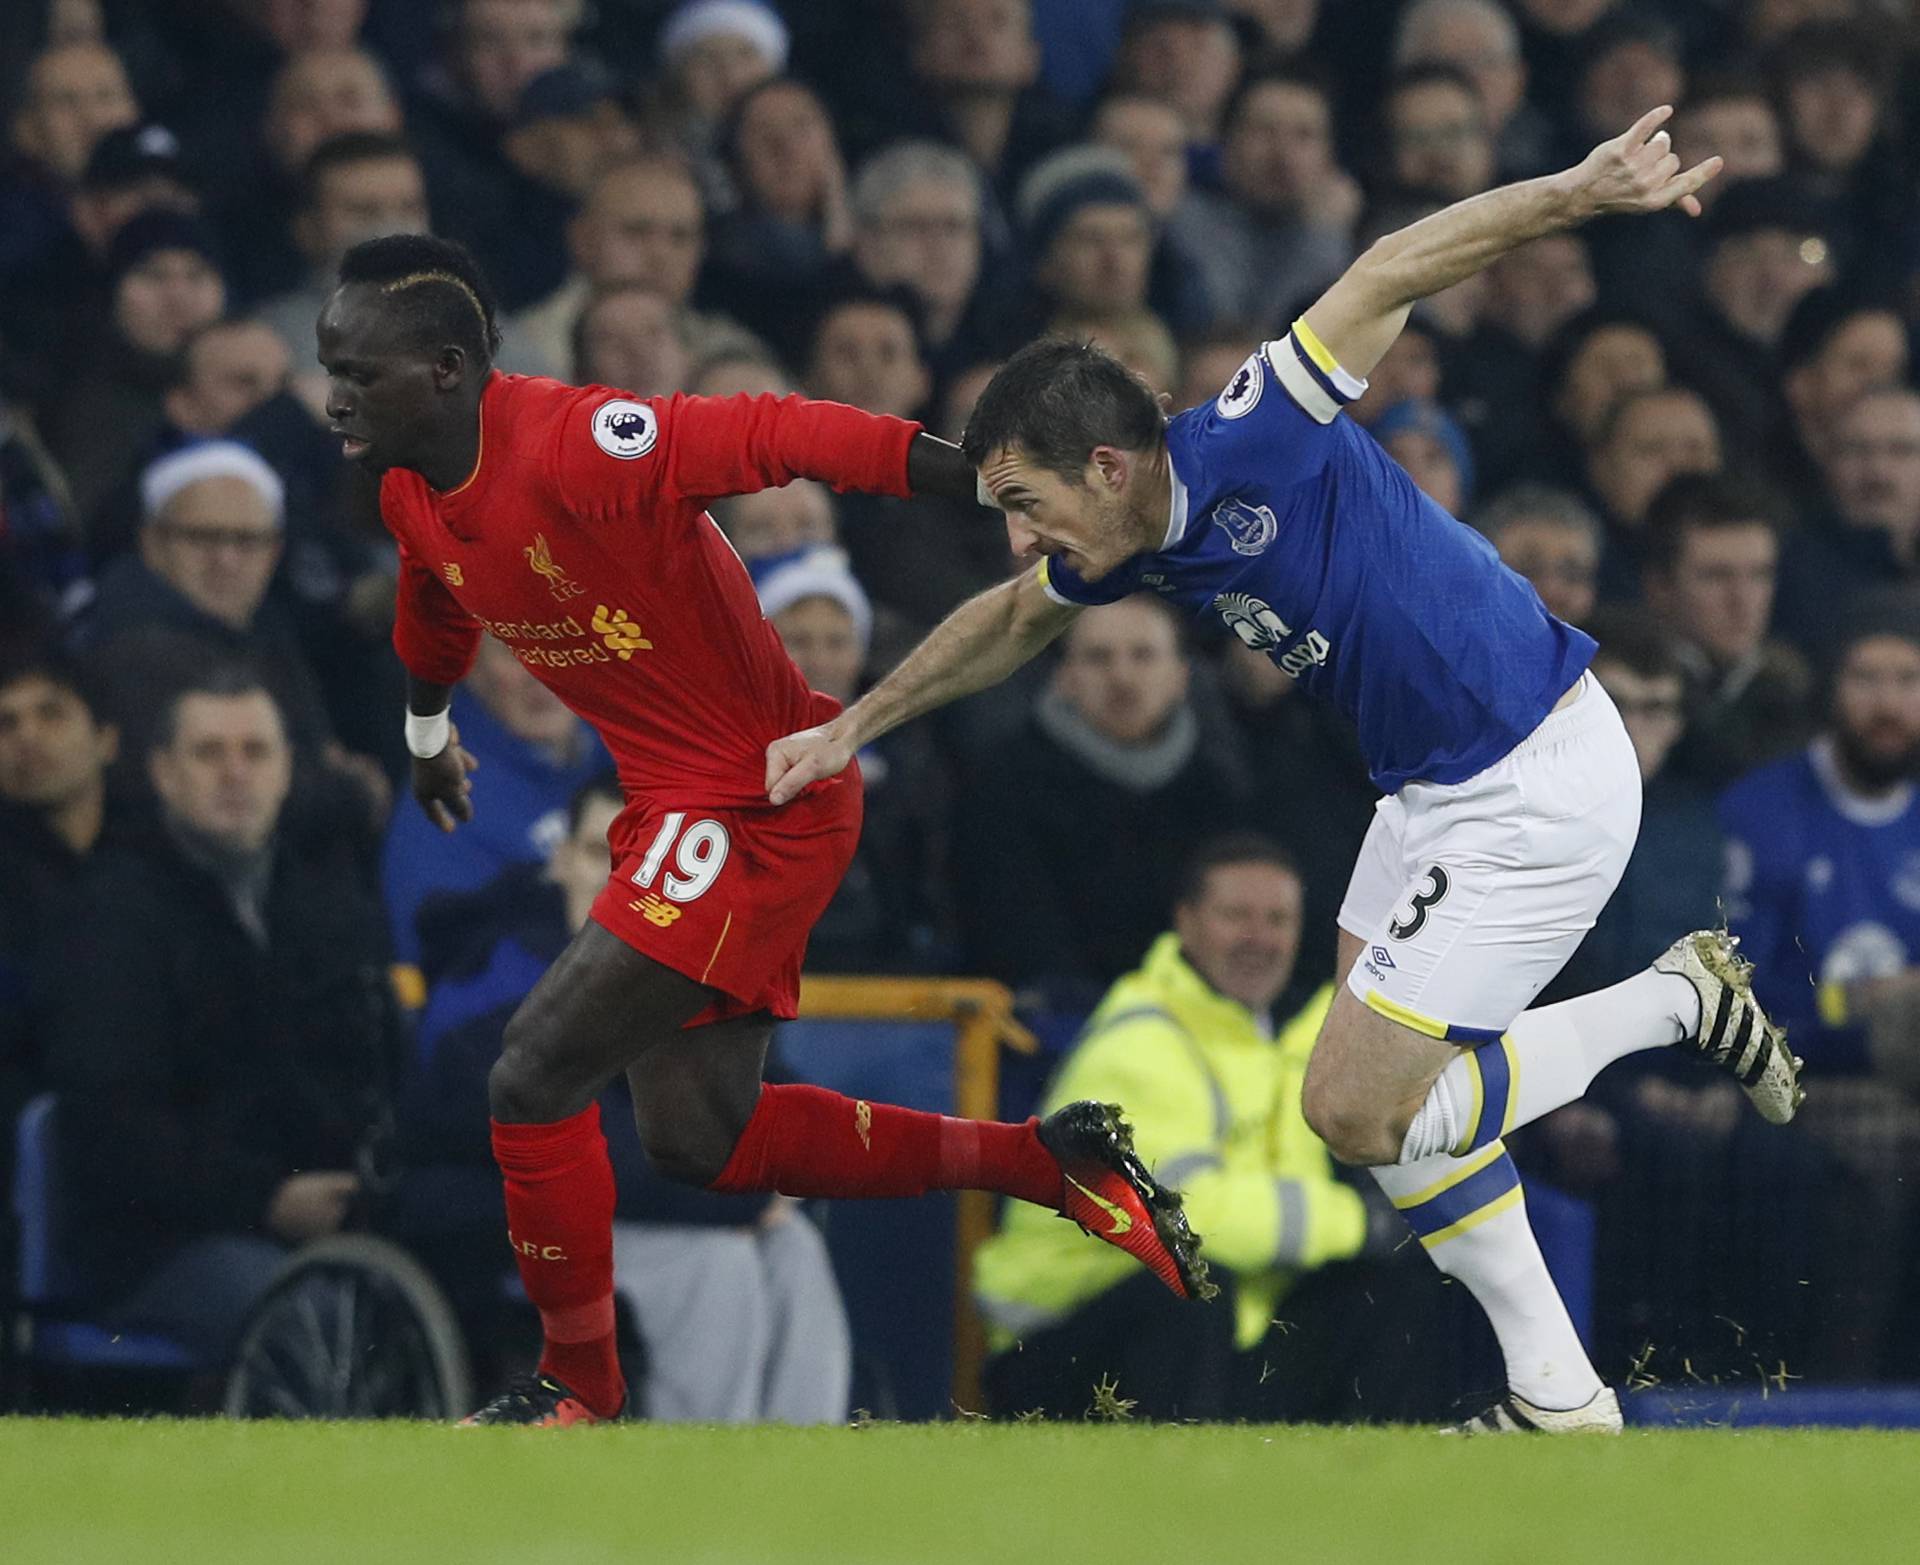 Liverpool's Sadio Mane in action with Everton's Leighton Baines